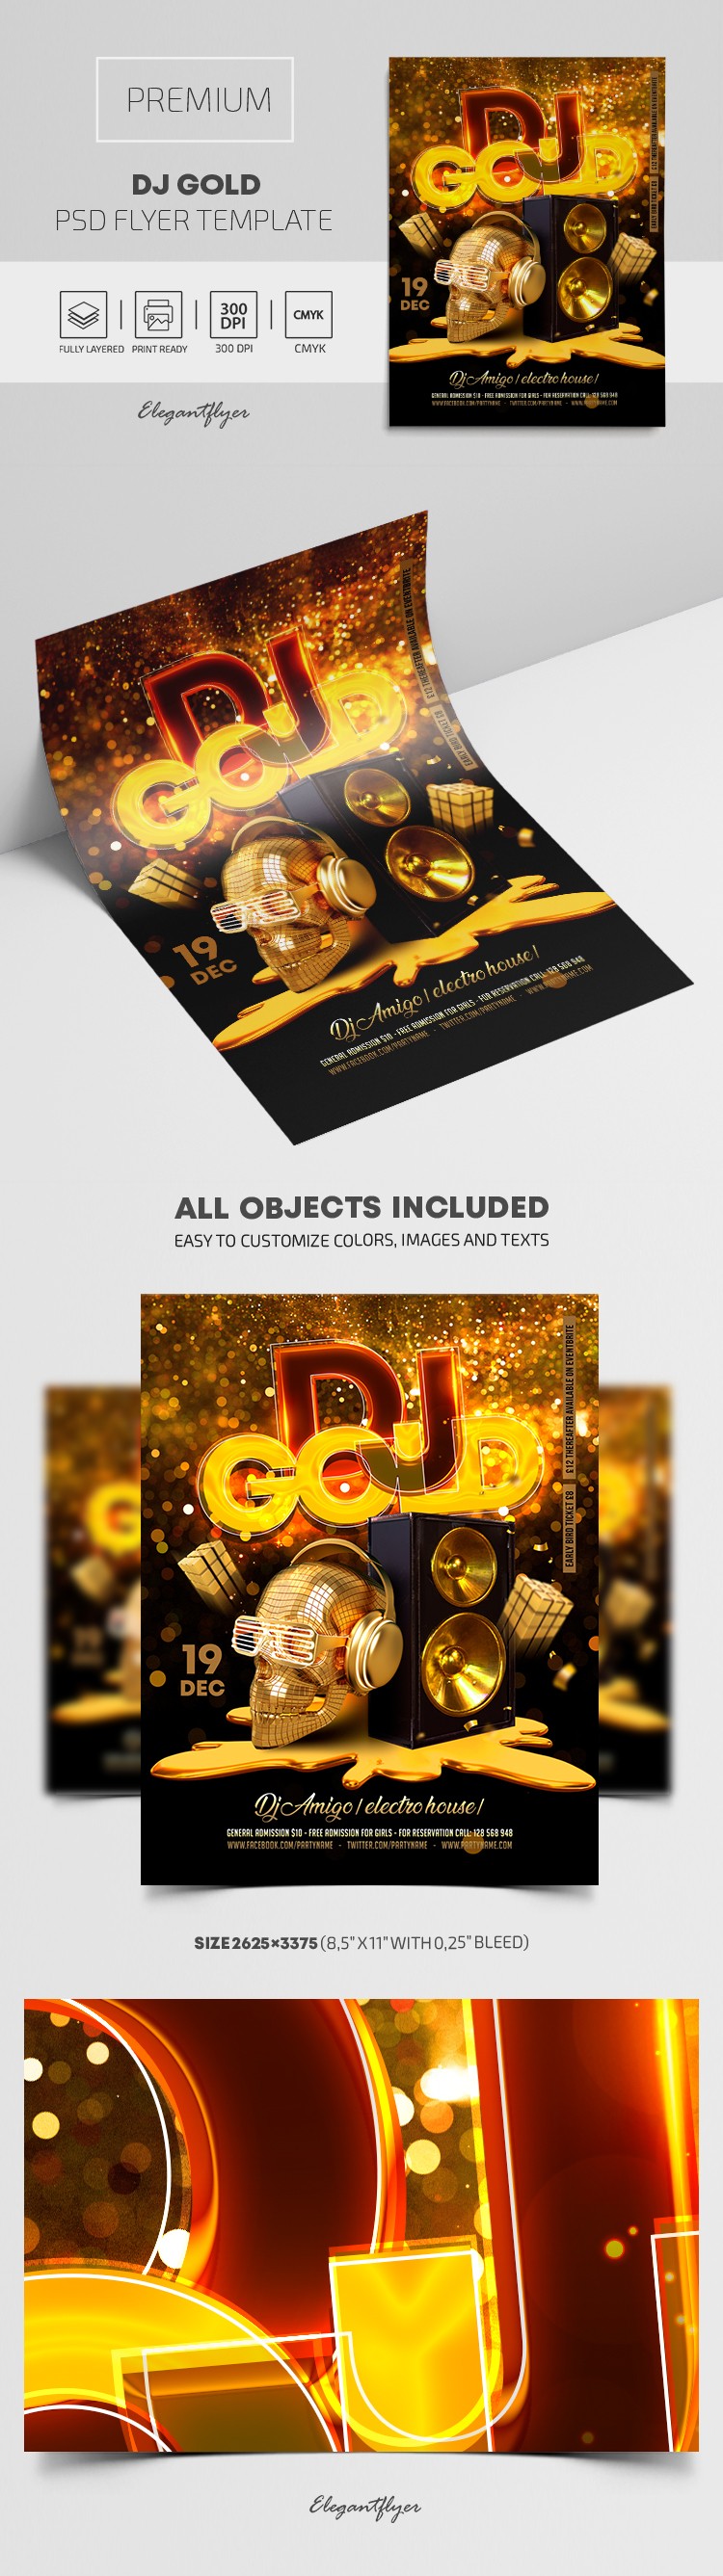 Dj Gold Flyer by ElegantFlyer